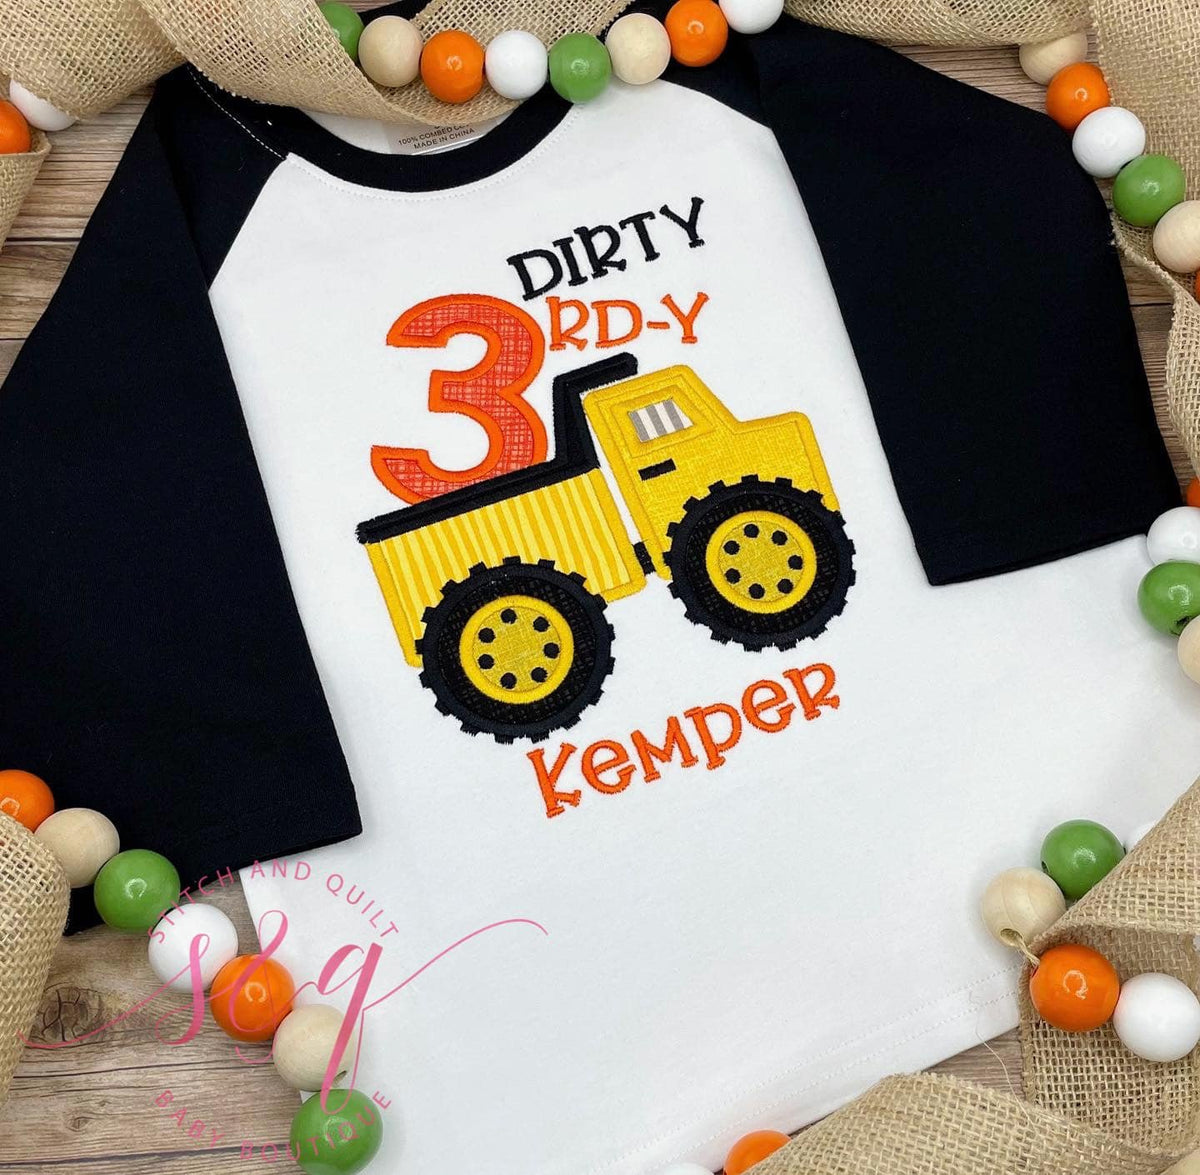 Dump truck birthday shirt for 3rd birthday, Dirty 3rd-y Birthday shirt, Dump truck birthday shirt